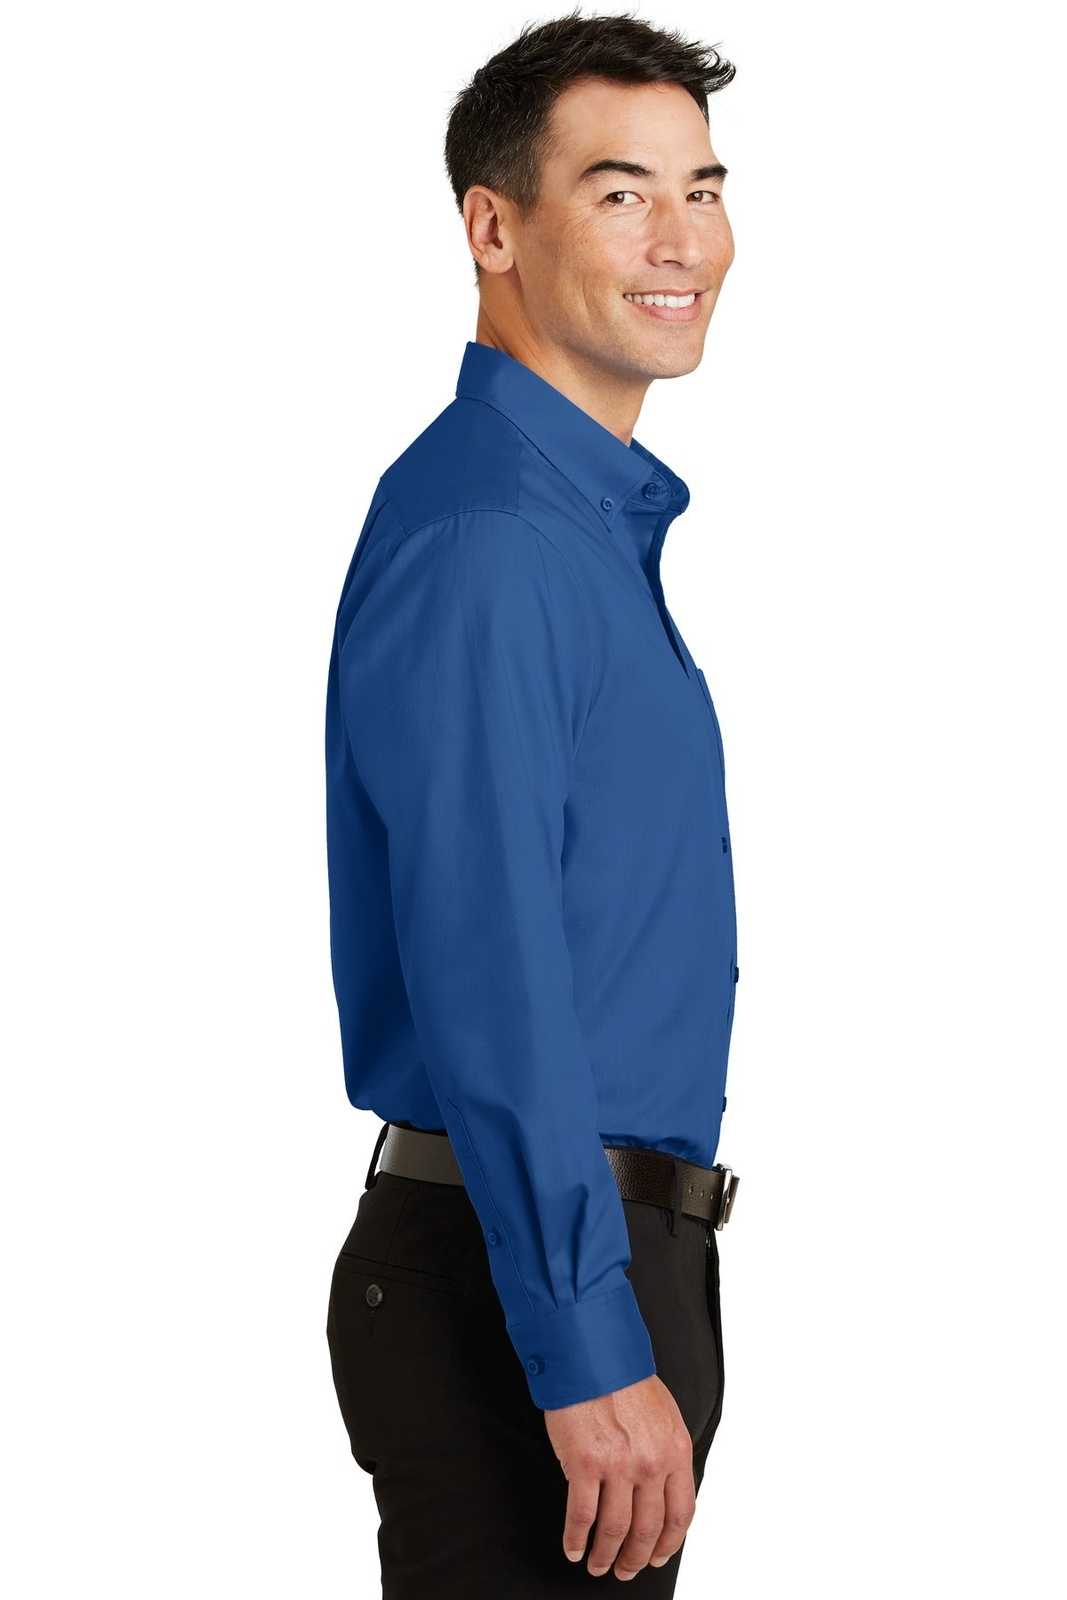 Port Authority TS663 Tall Superpro Twill Shirt - True Blue - HIT a Double - 3